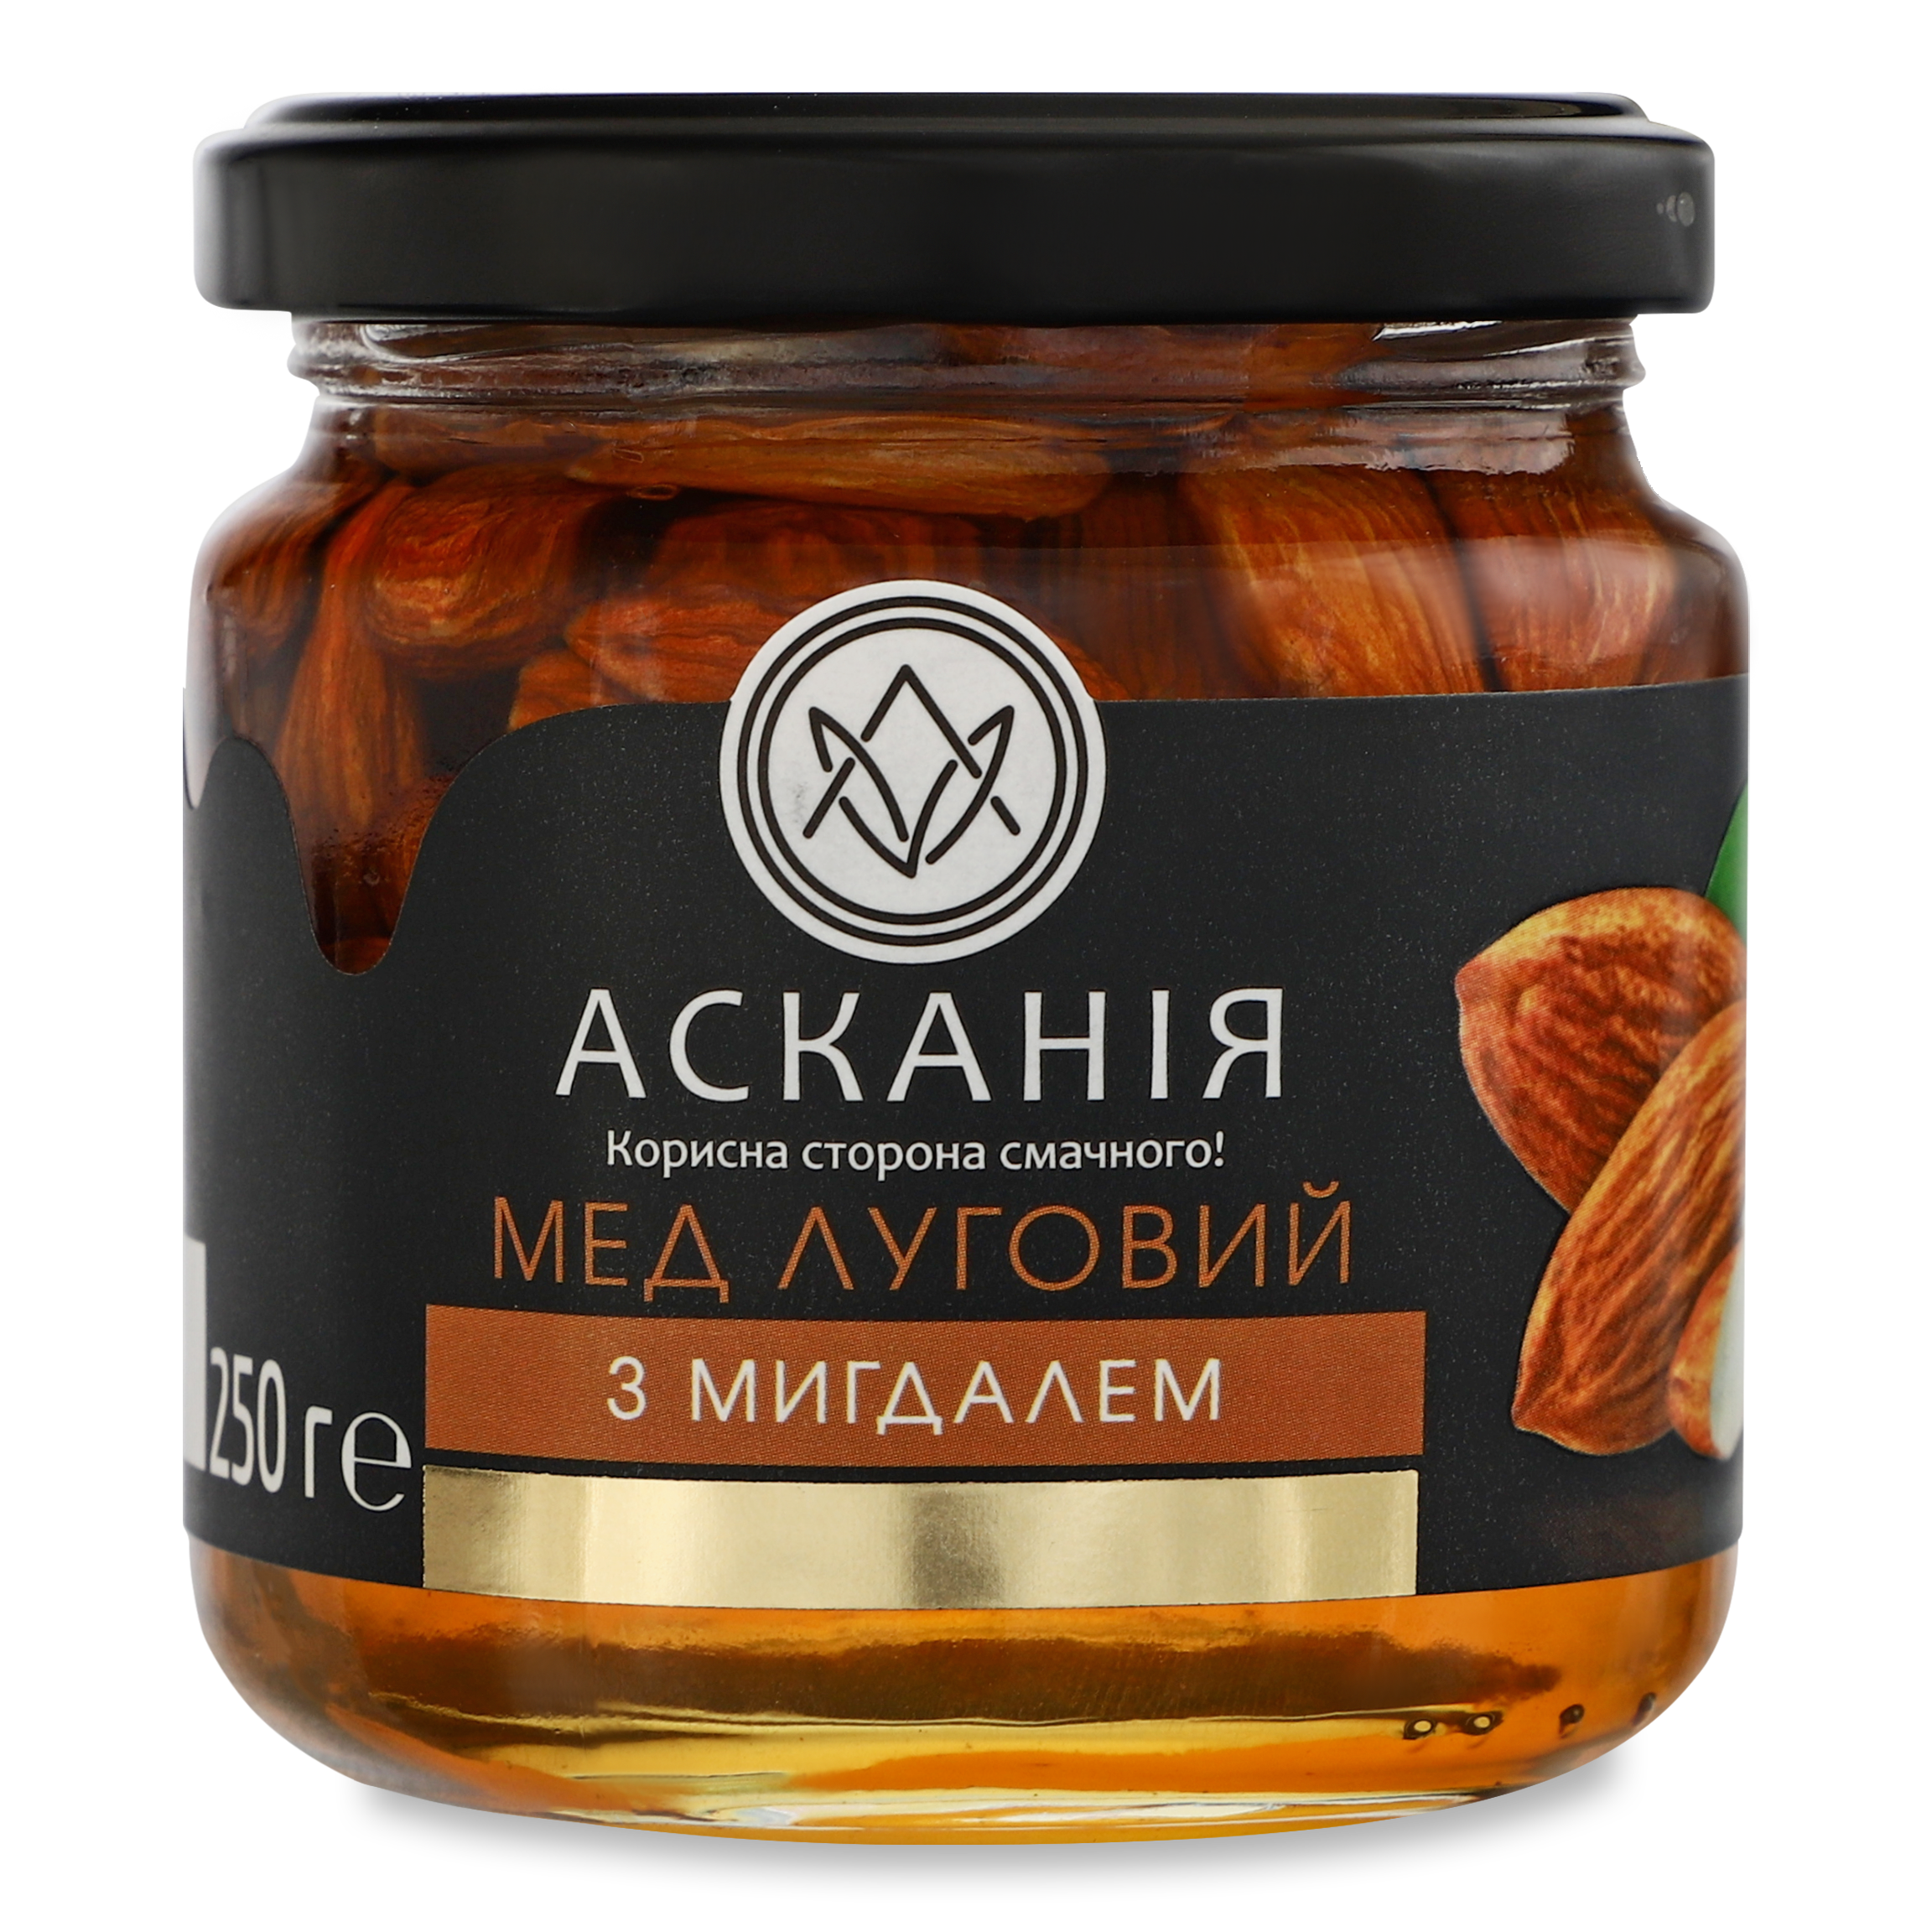 Askania Meadow Honey with Almonds 250g